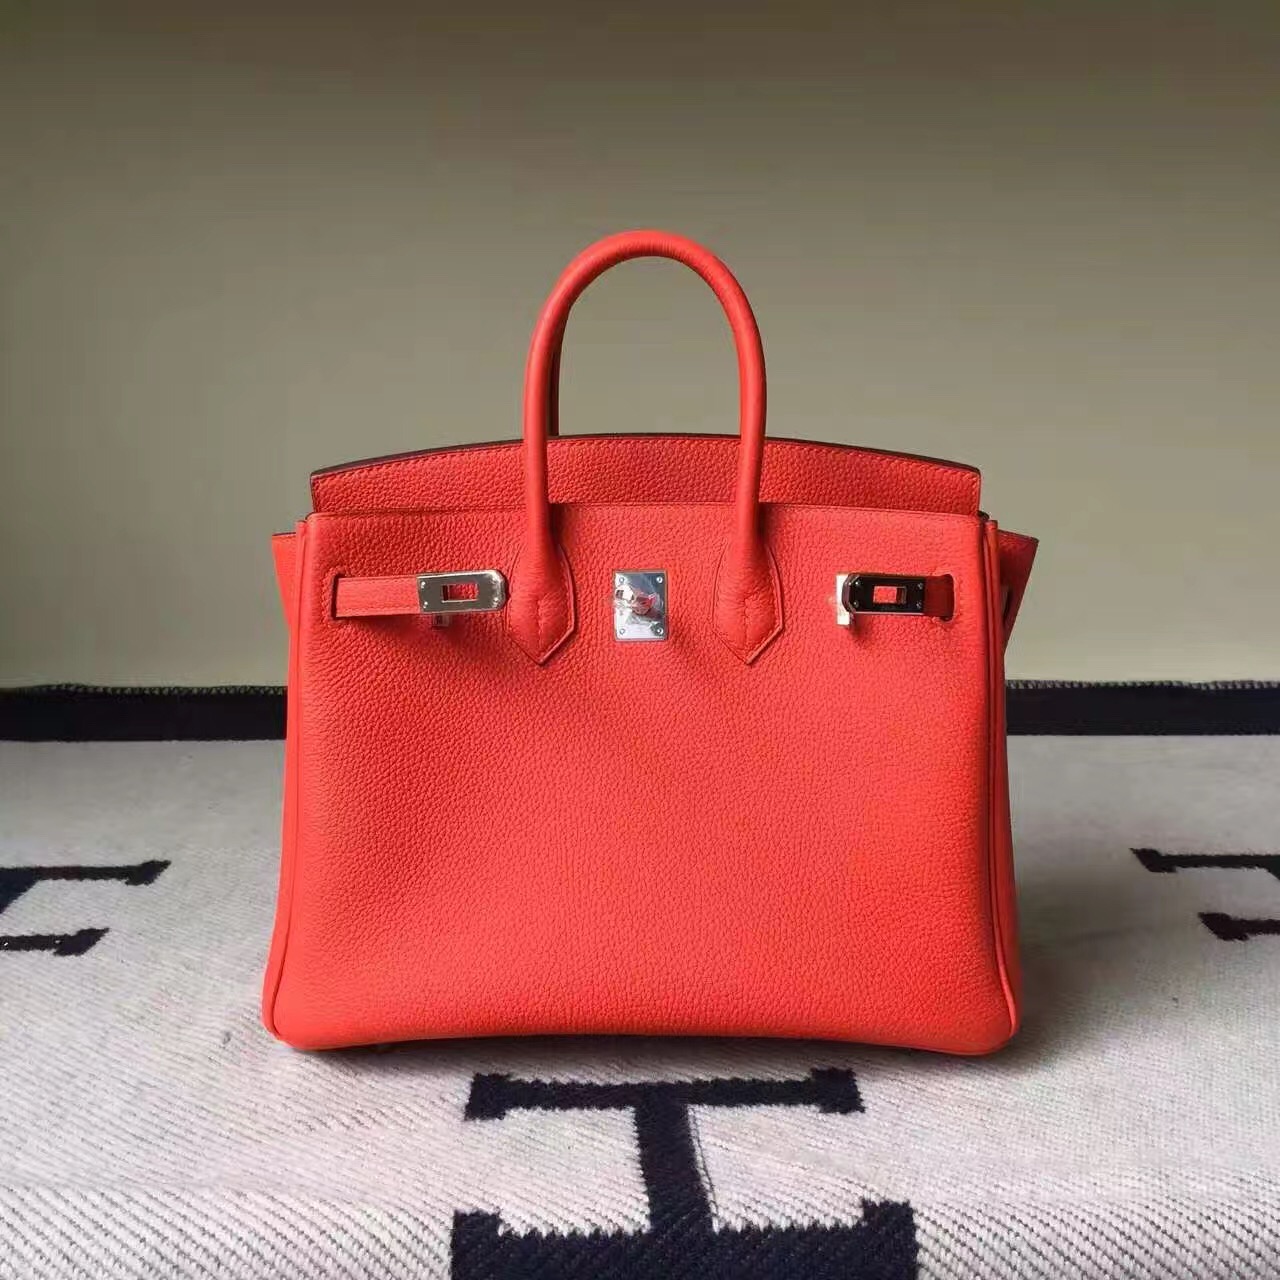 Cheap Hermes 9T Flame Red Togo Calfskin Leather Birkin Bag 25cm